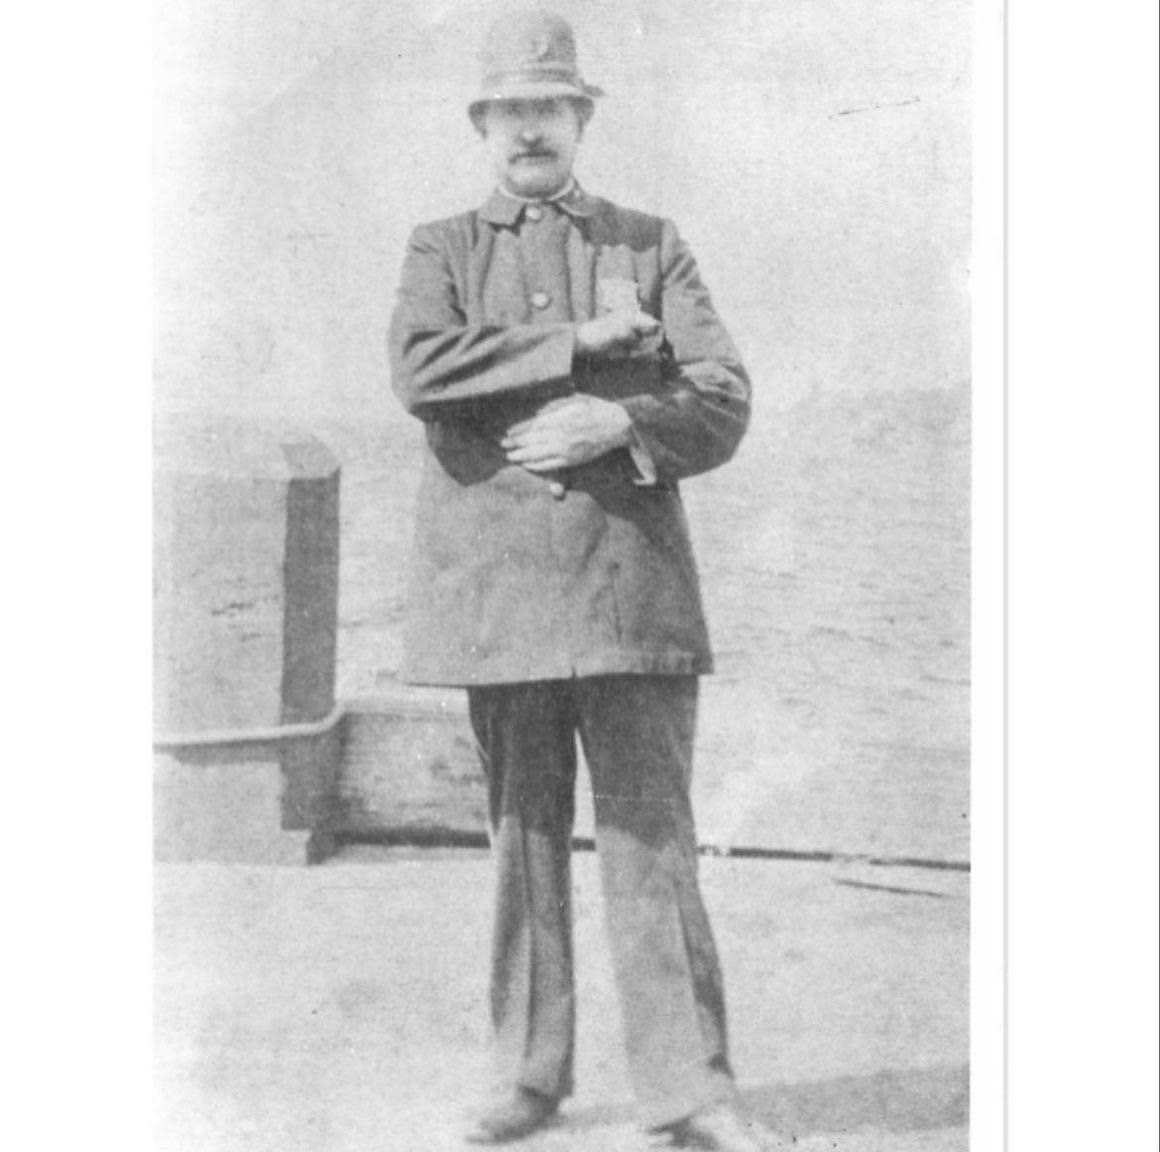 Police Officer William F. Boyle, Jr. | Dobbs Ferry Police Department, New York